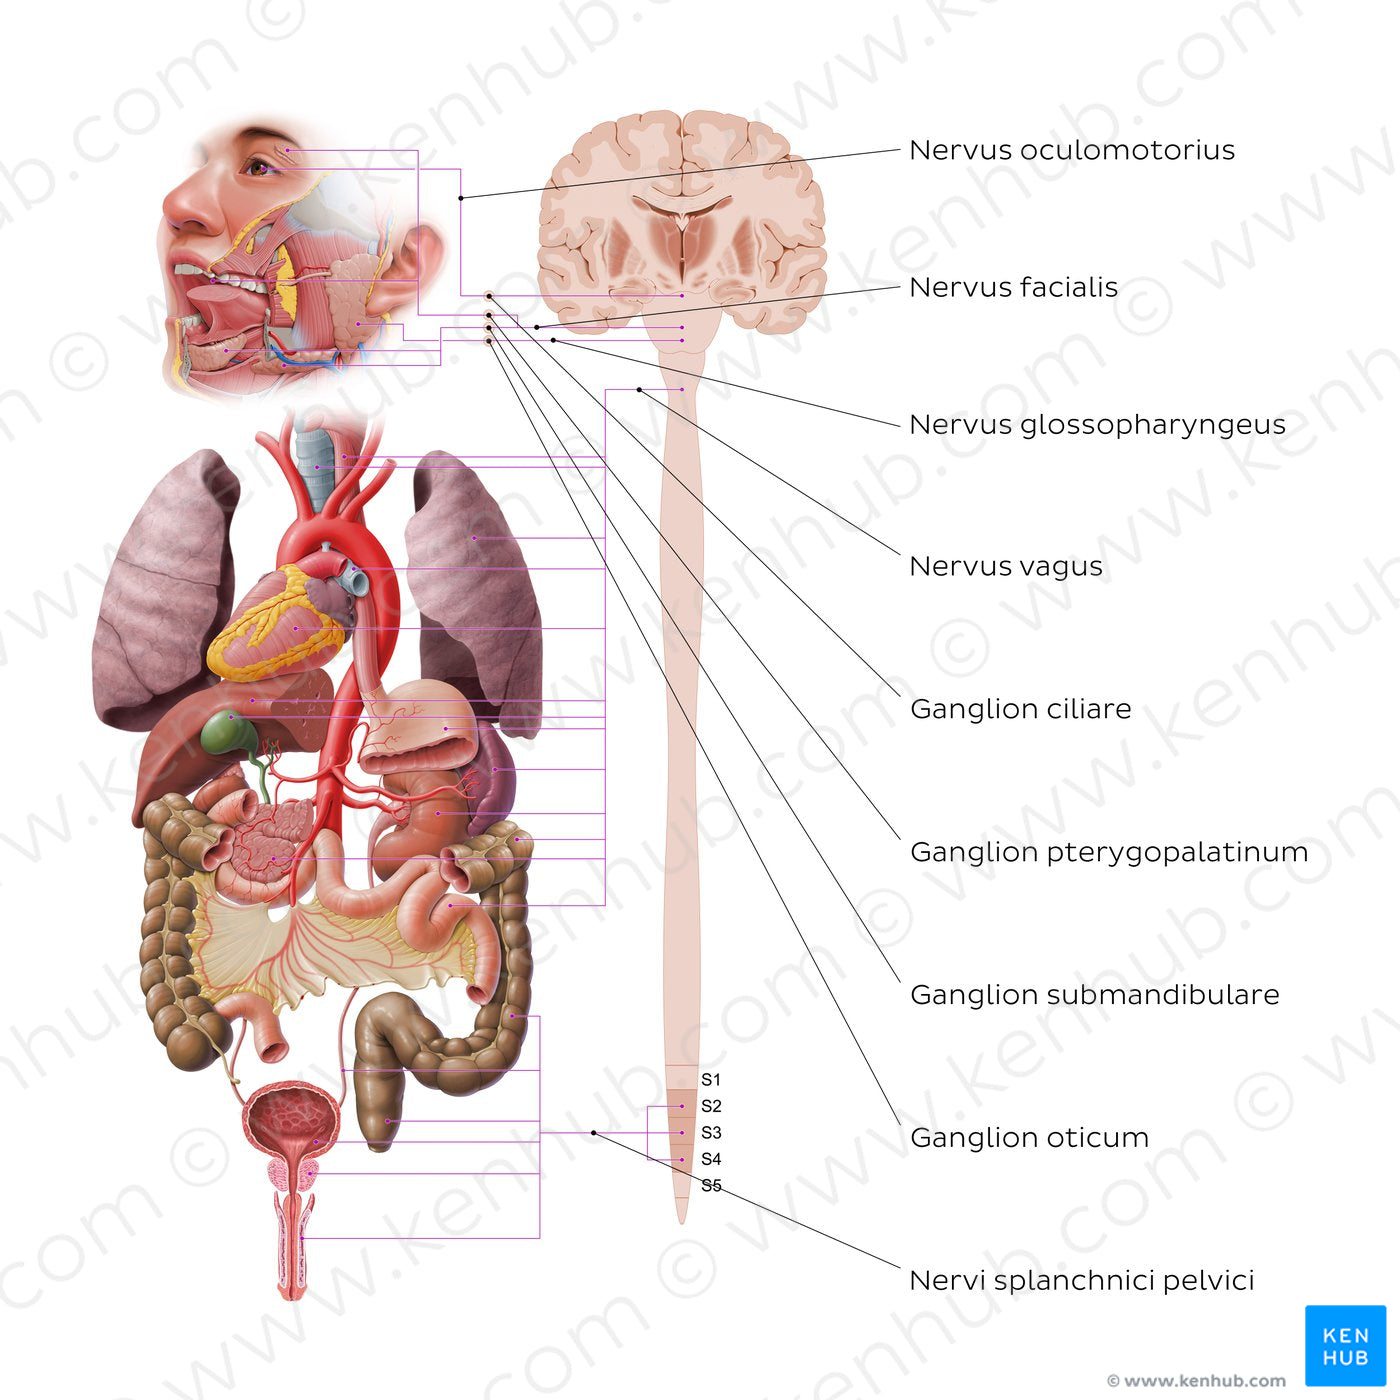 Autonomic nervous system - parasympathetic nervous system (Latin)